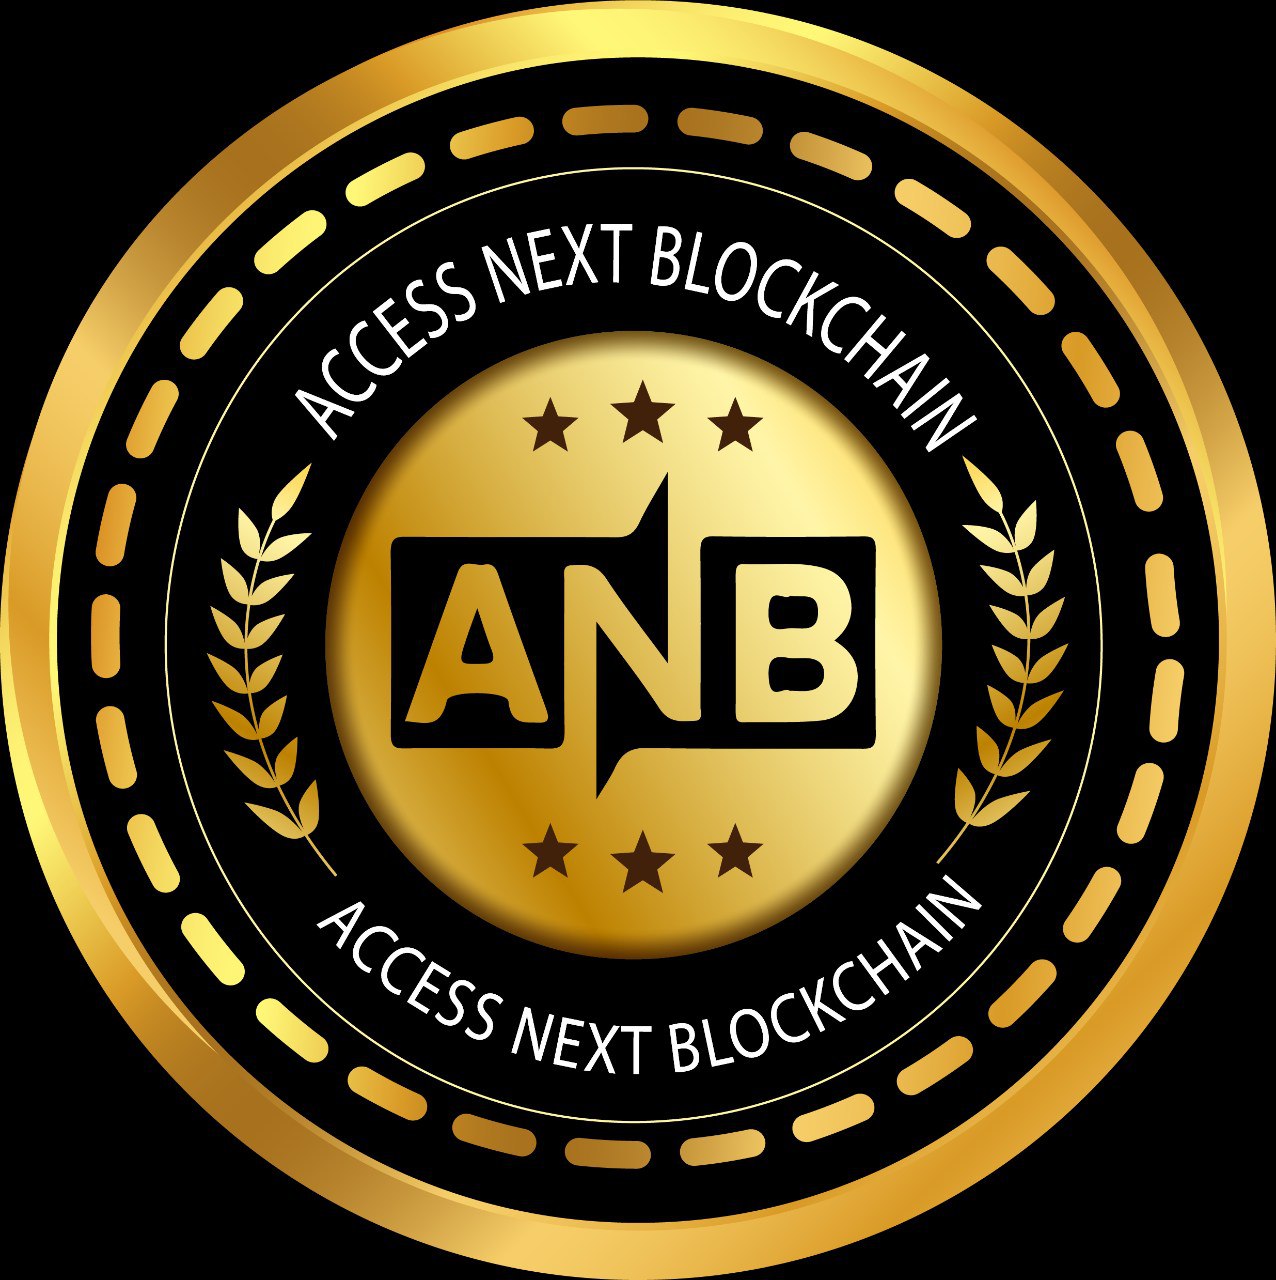 Access Next Blockchain logo